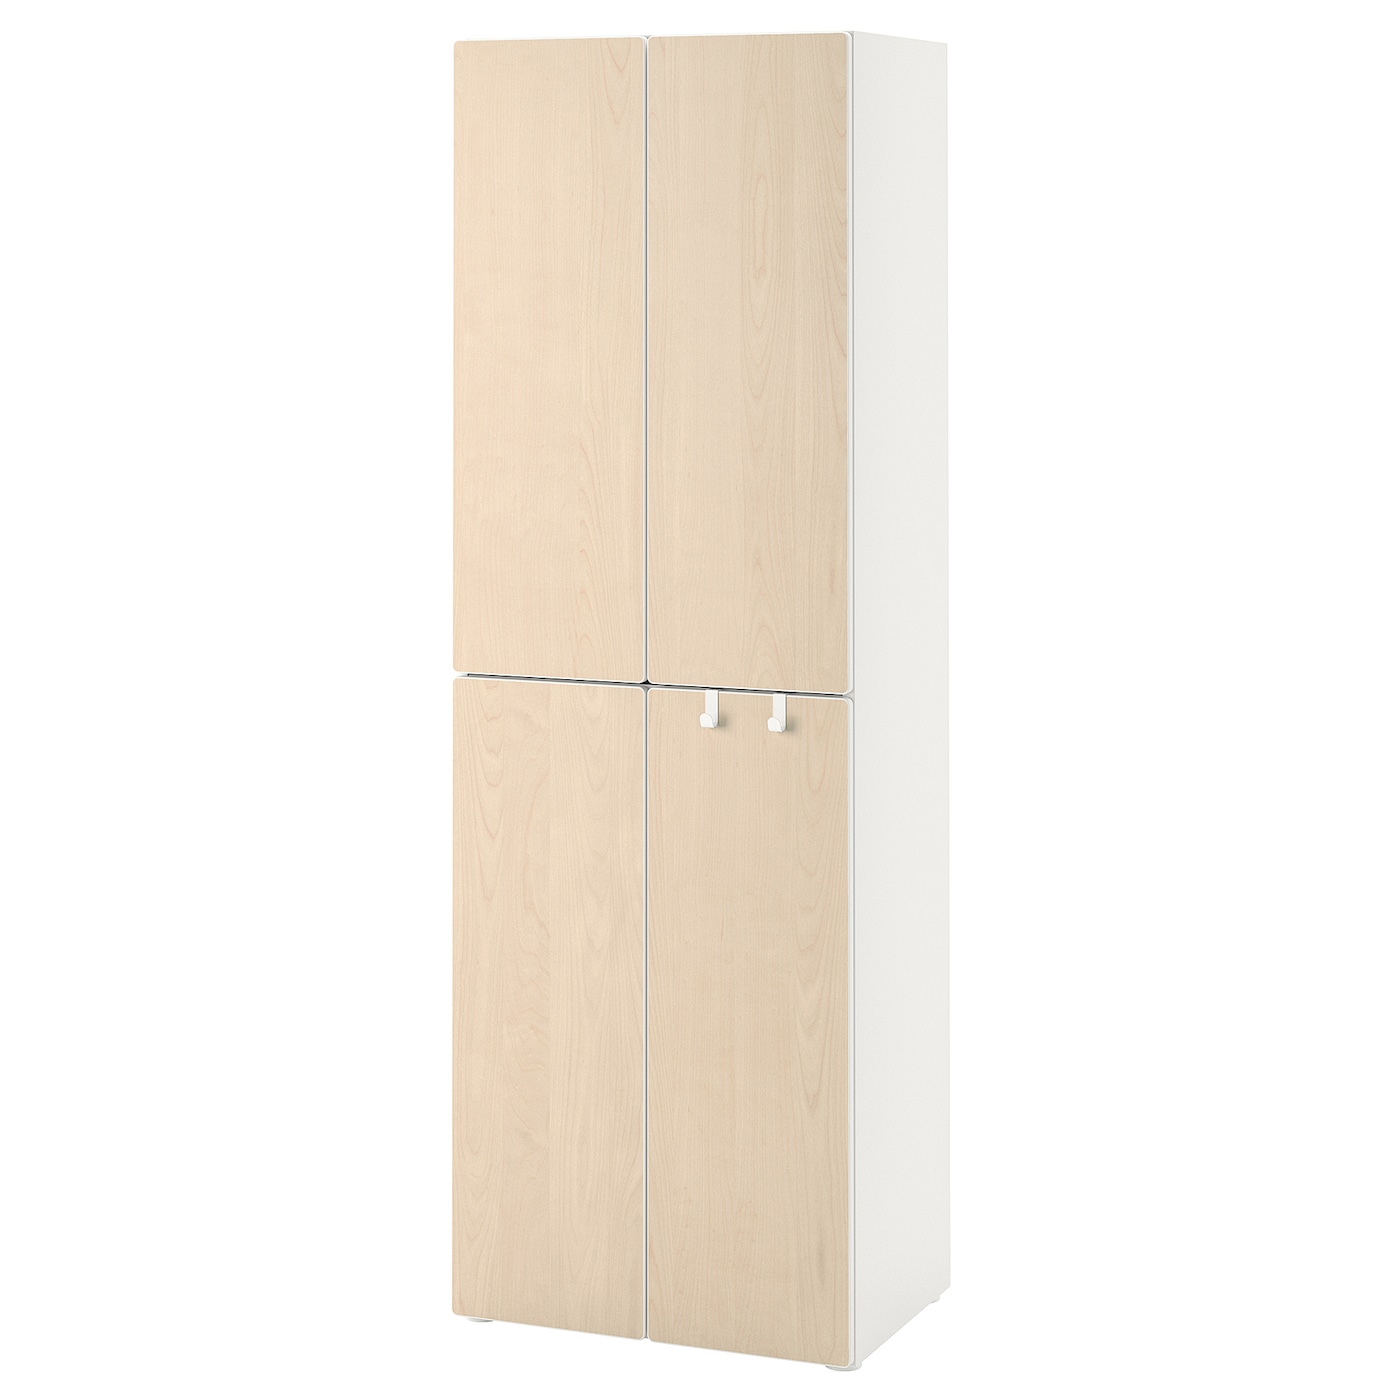 Шкаф детский - IKEA PLATSA/SMÅSTAD/SMASTAD, 60x57x181 см, белый/светло-коричневый, ИКЕА